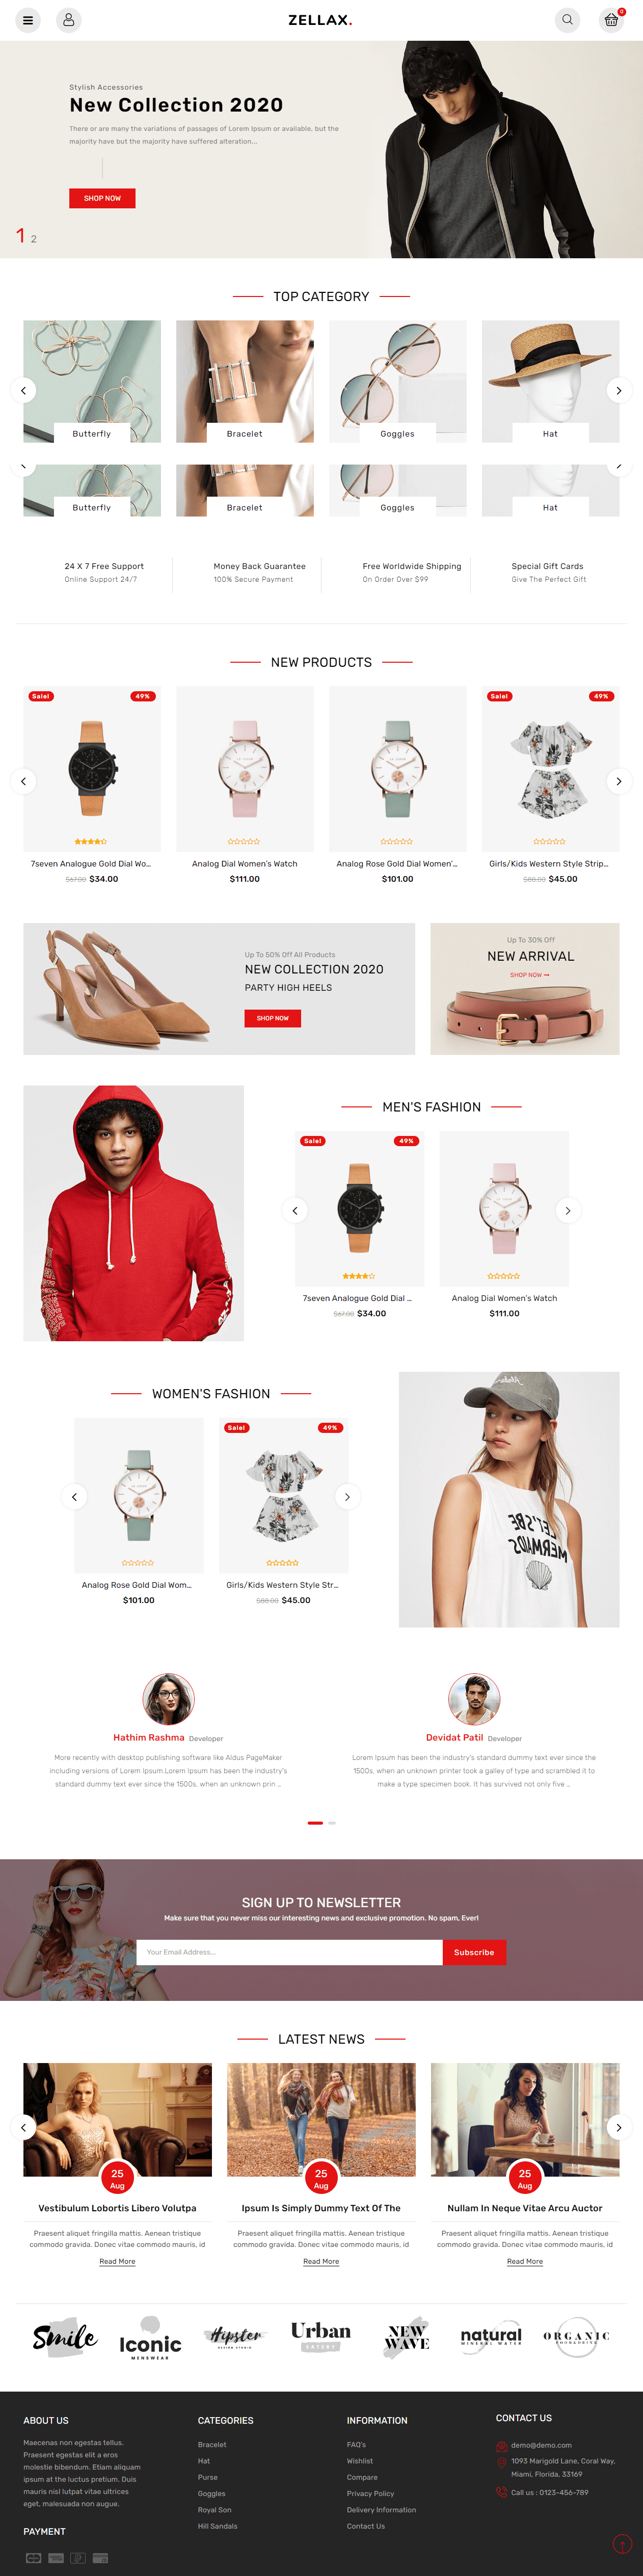 FashionBeauty-website-template-1